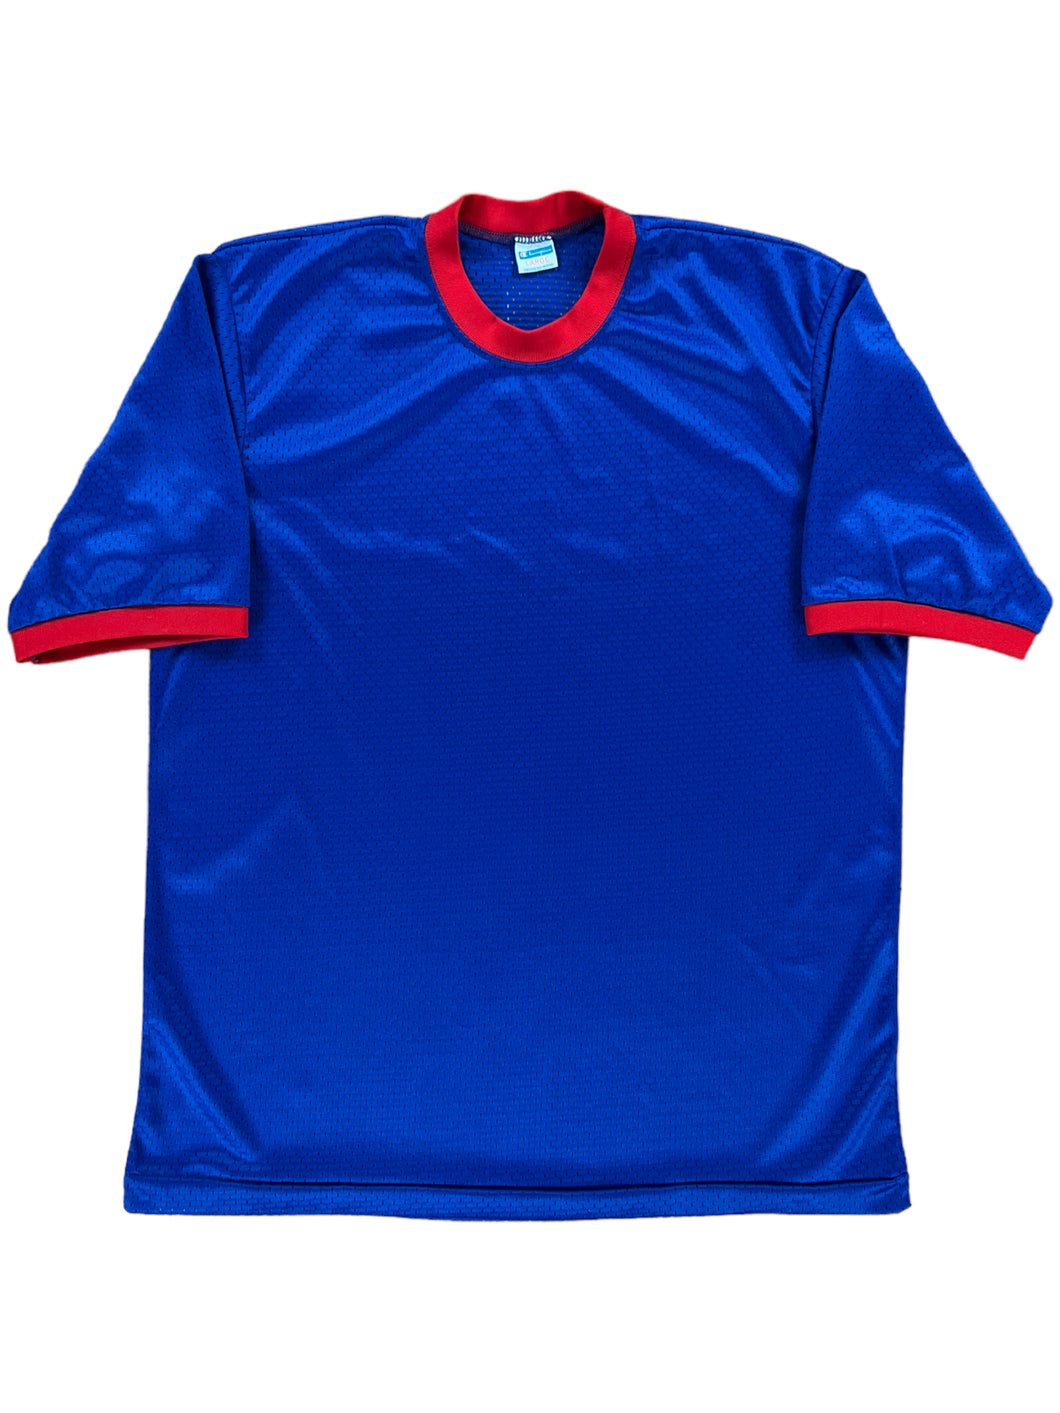 Vintage 70s Champion blue bar blank football jersey (L)